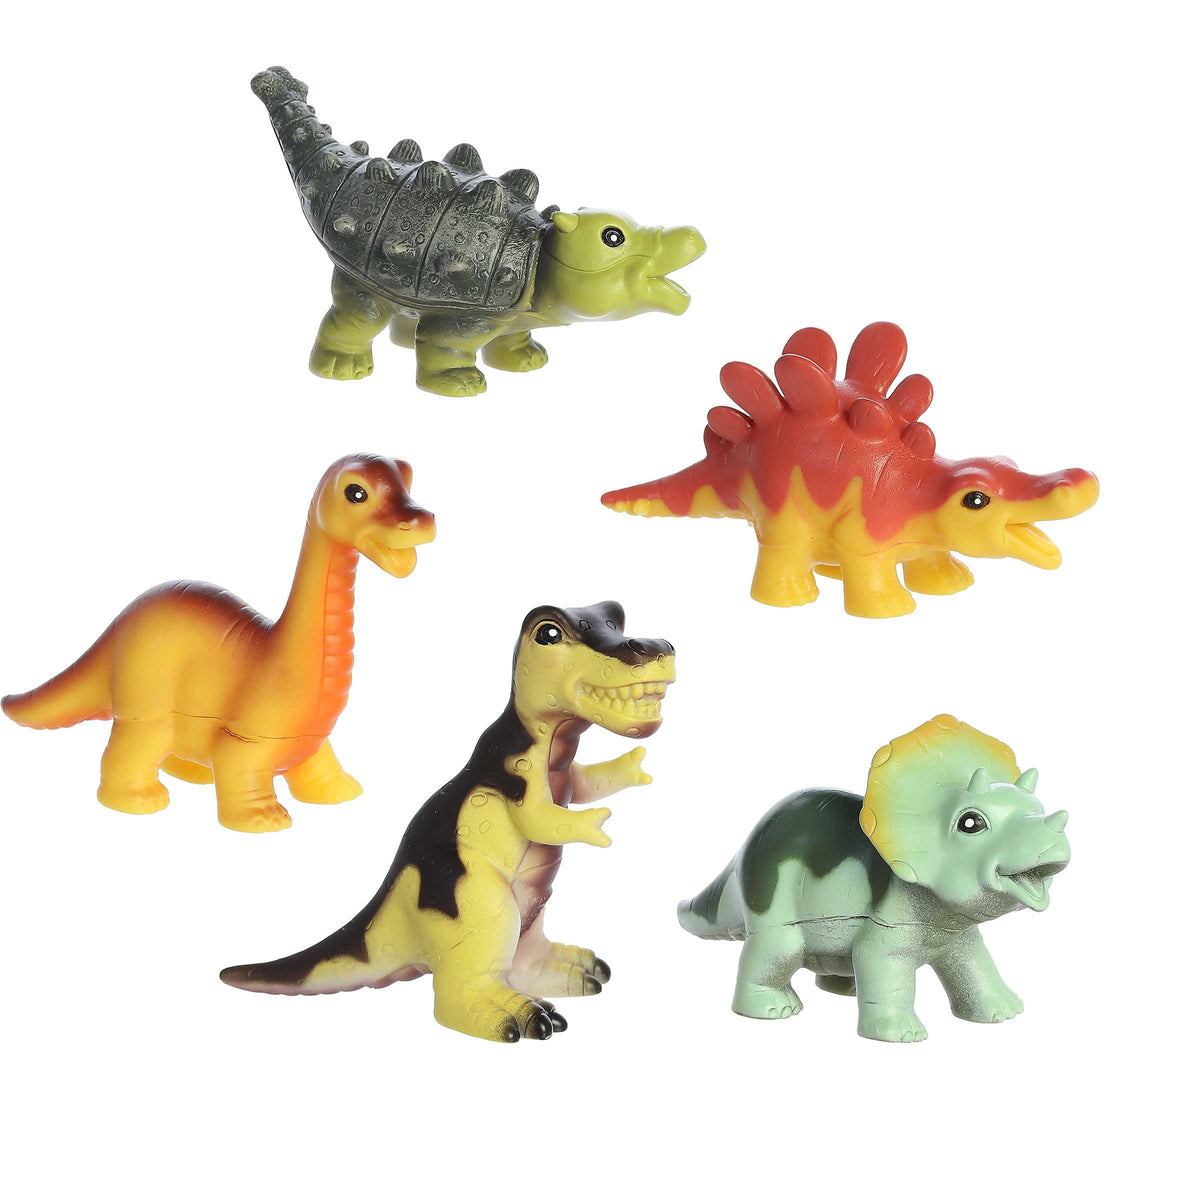 Aurora® Toys - Habitat™ - My First Dinosaur Animal Playset